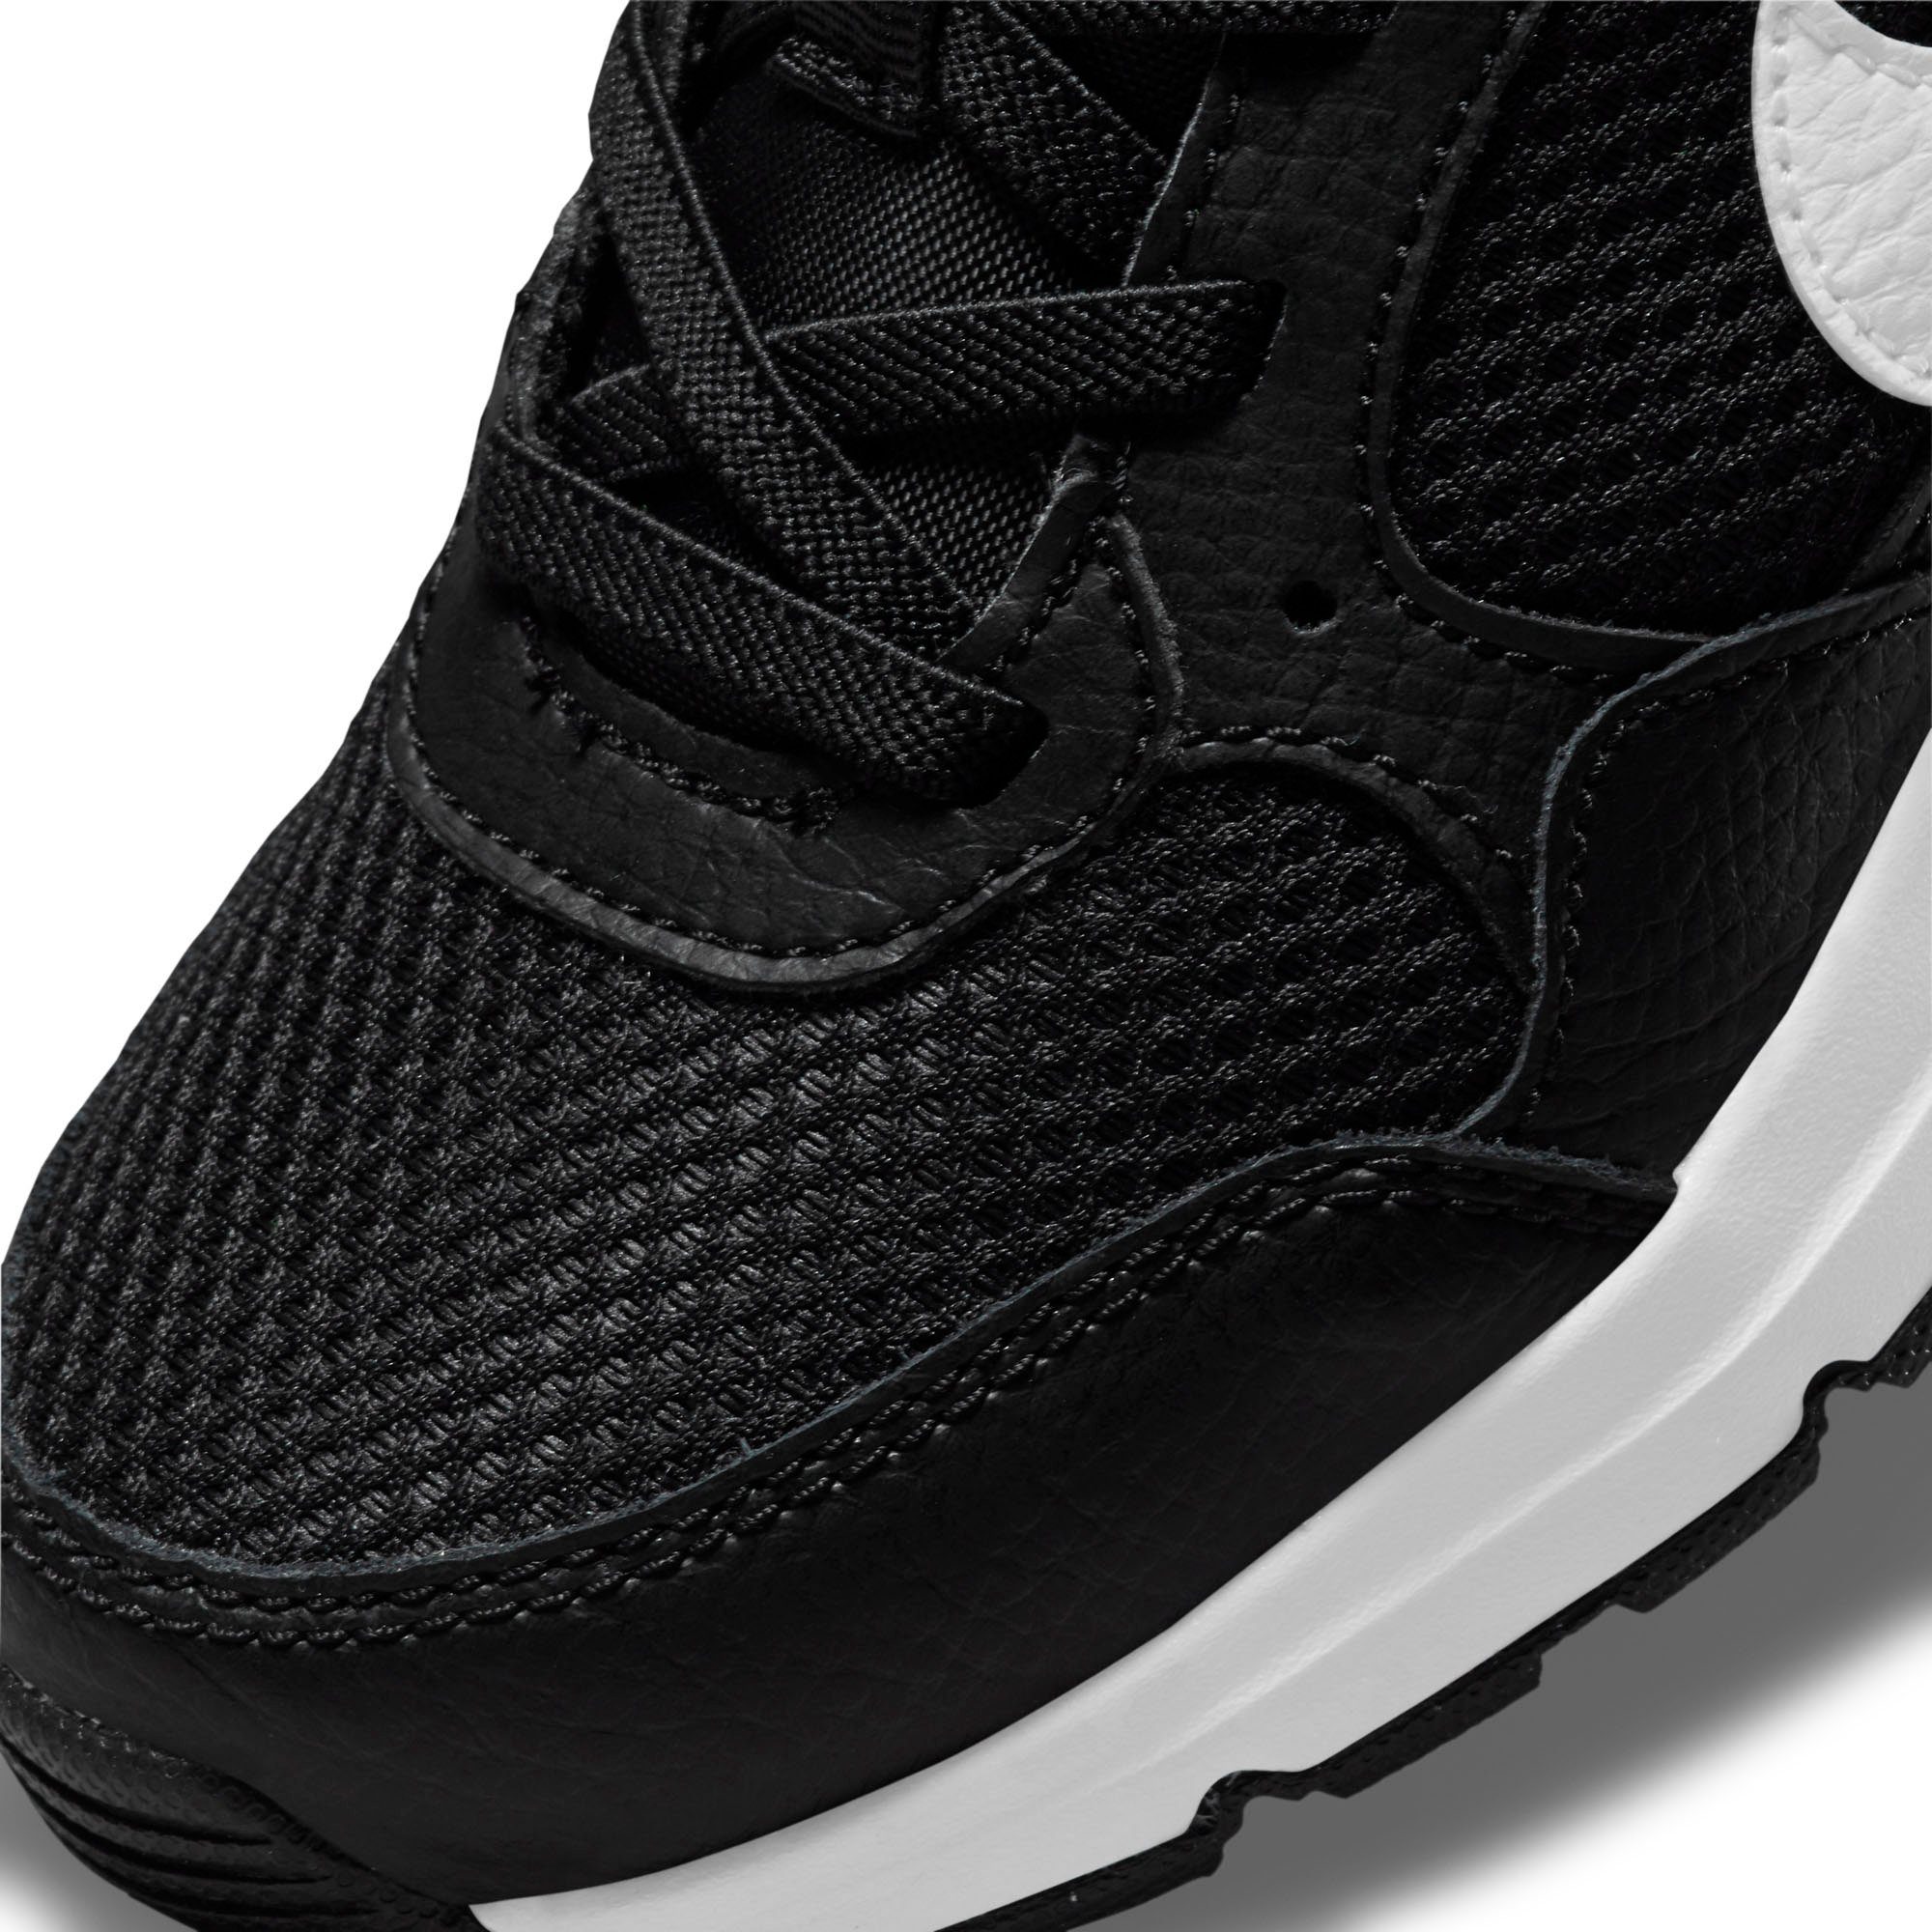 (PS) AIR Sneaker MAX SC schwarz-weiß Sportswear Nike